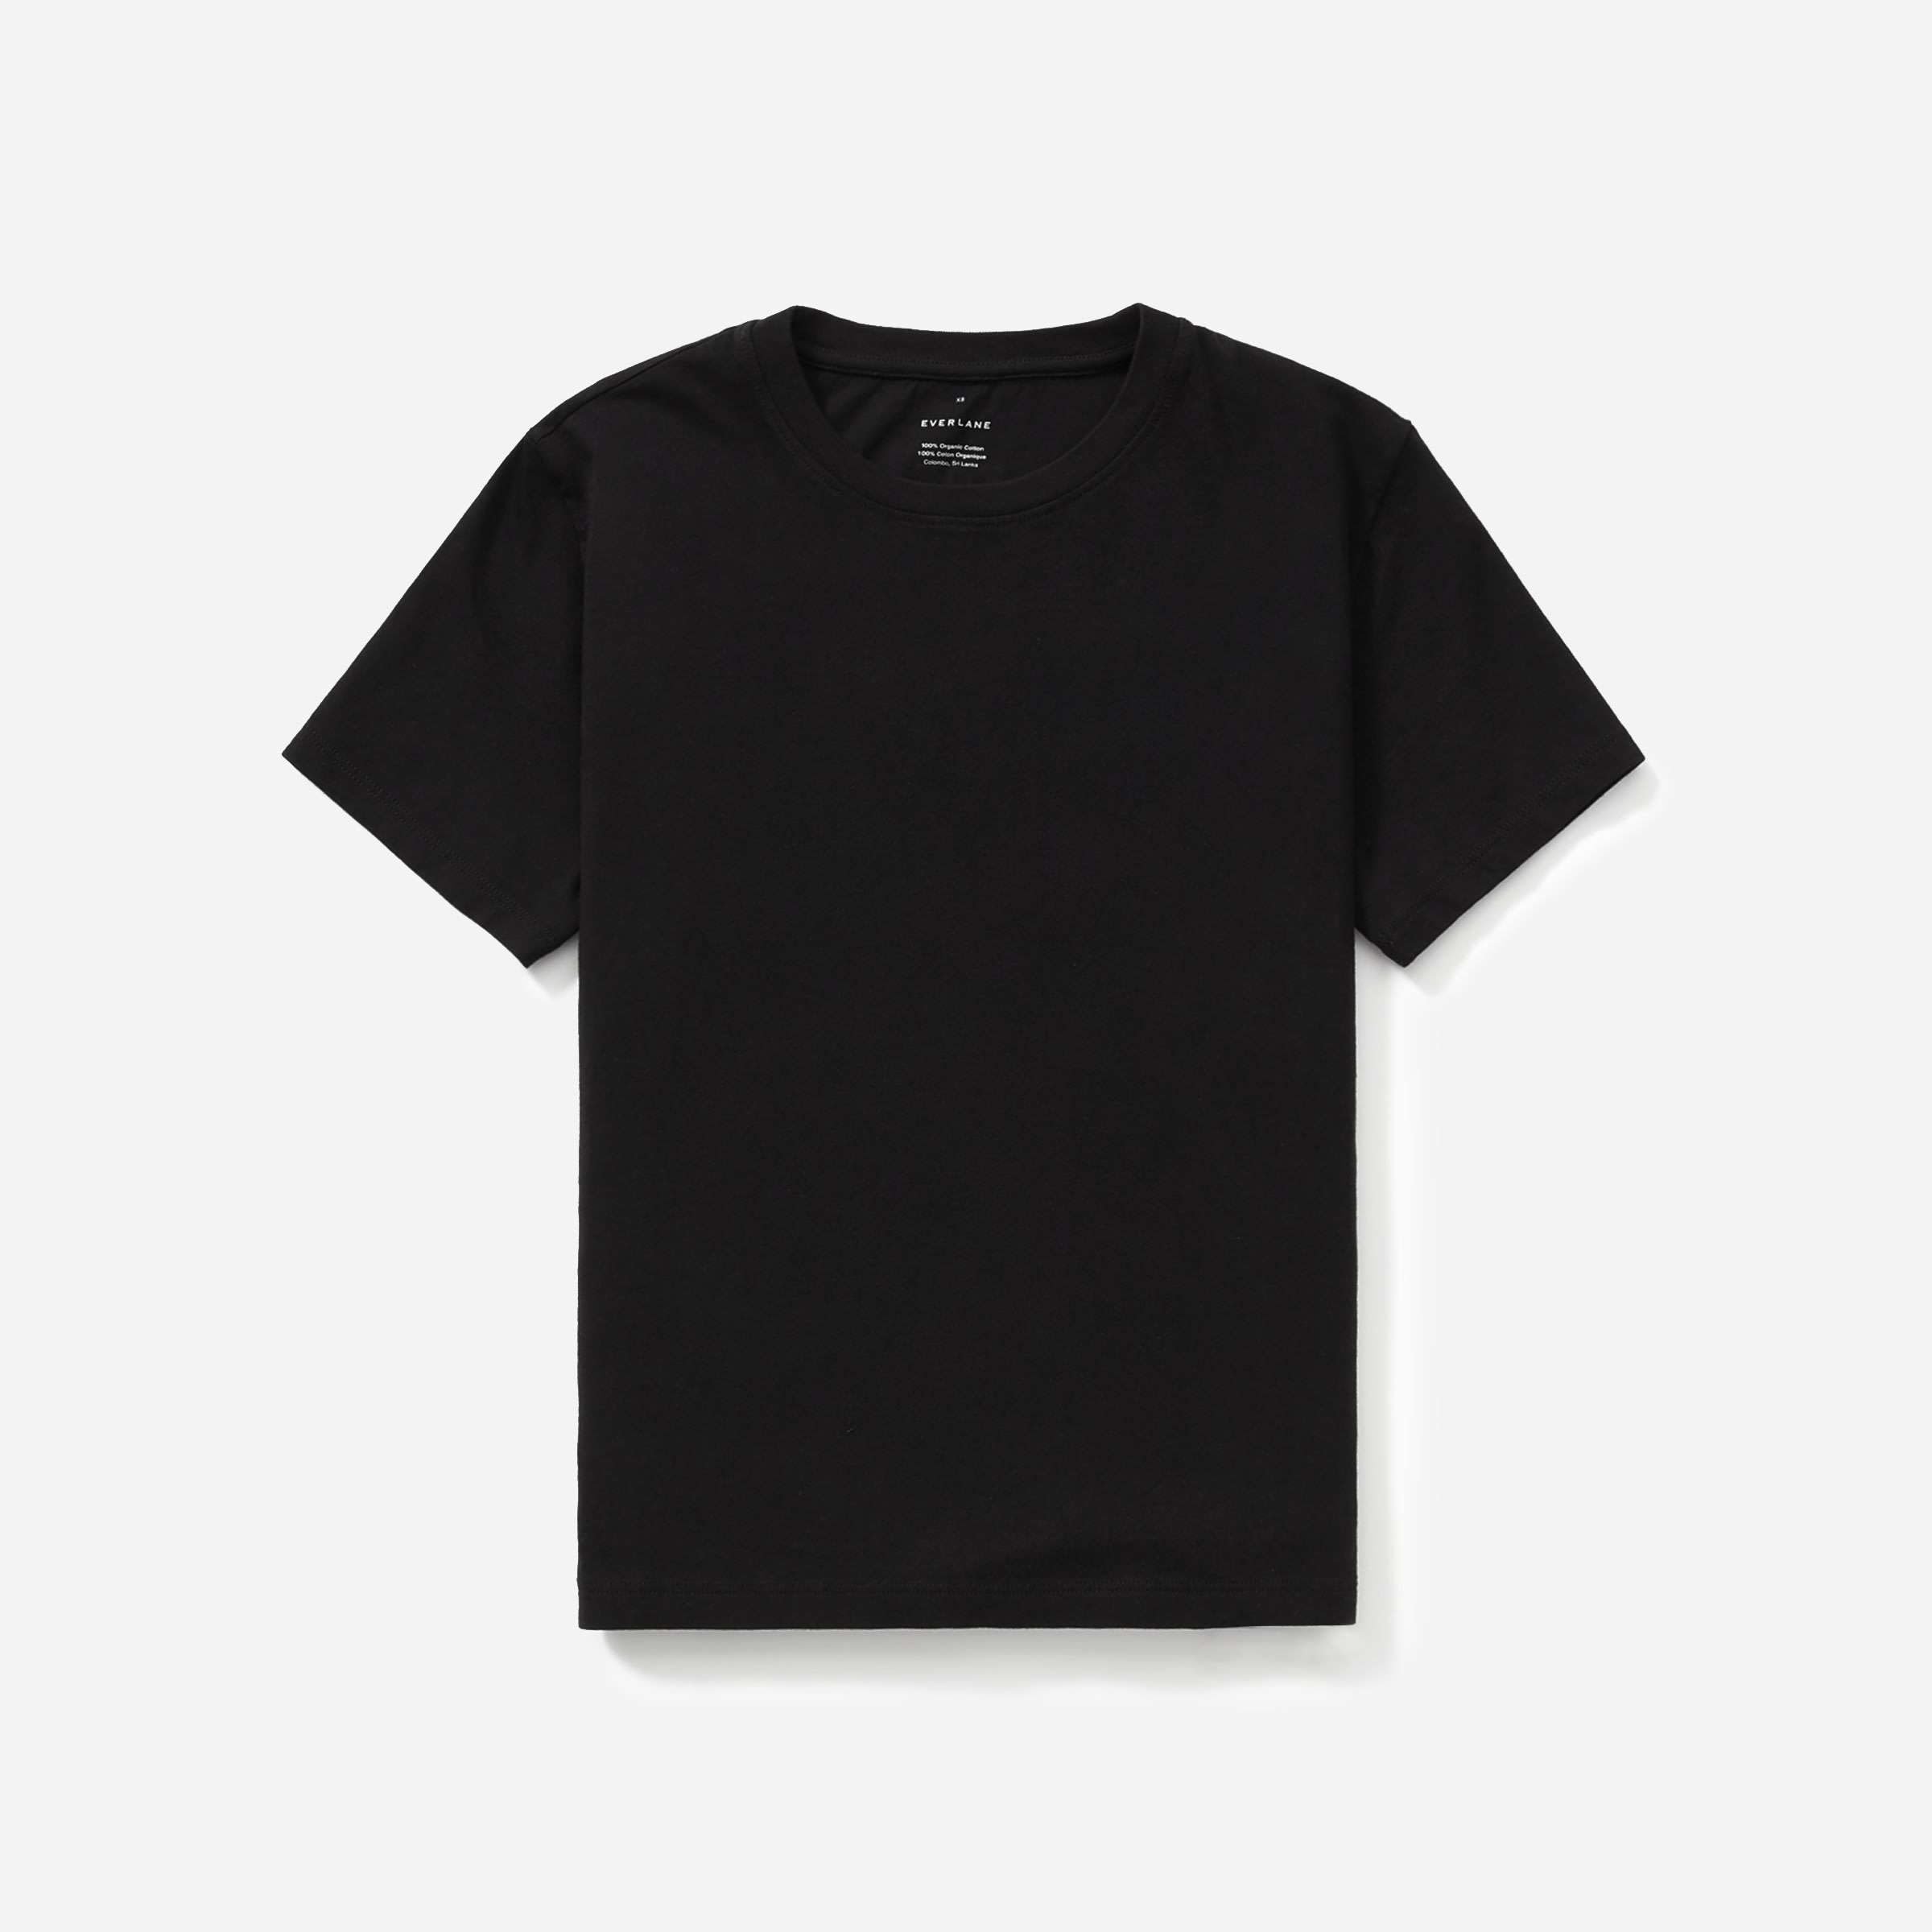 Everlane Women's Organic Cotton Box-Cut T-Shirt in Black, Size 3XL